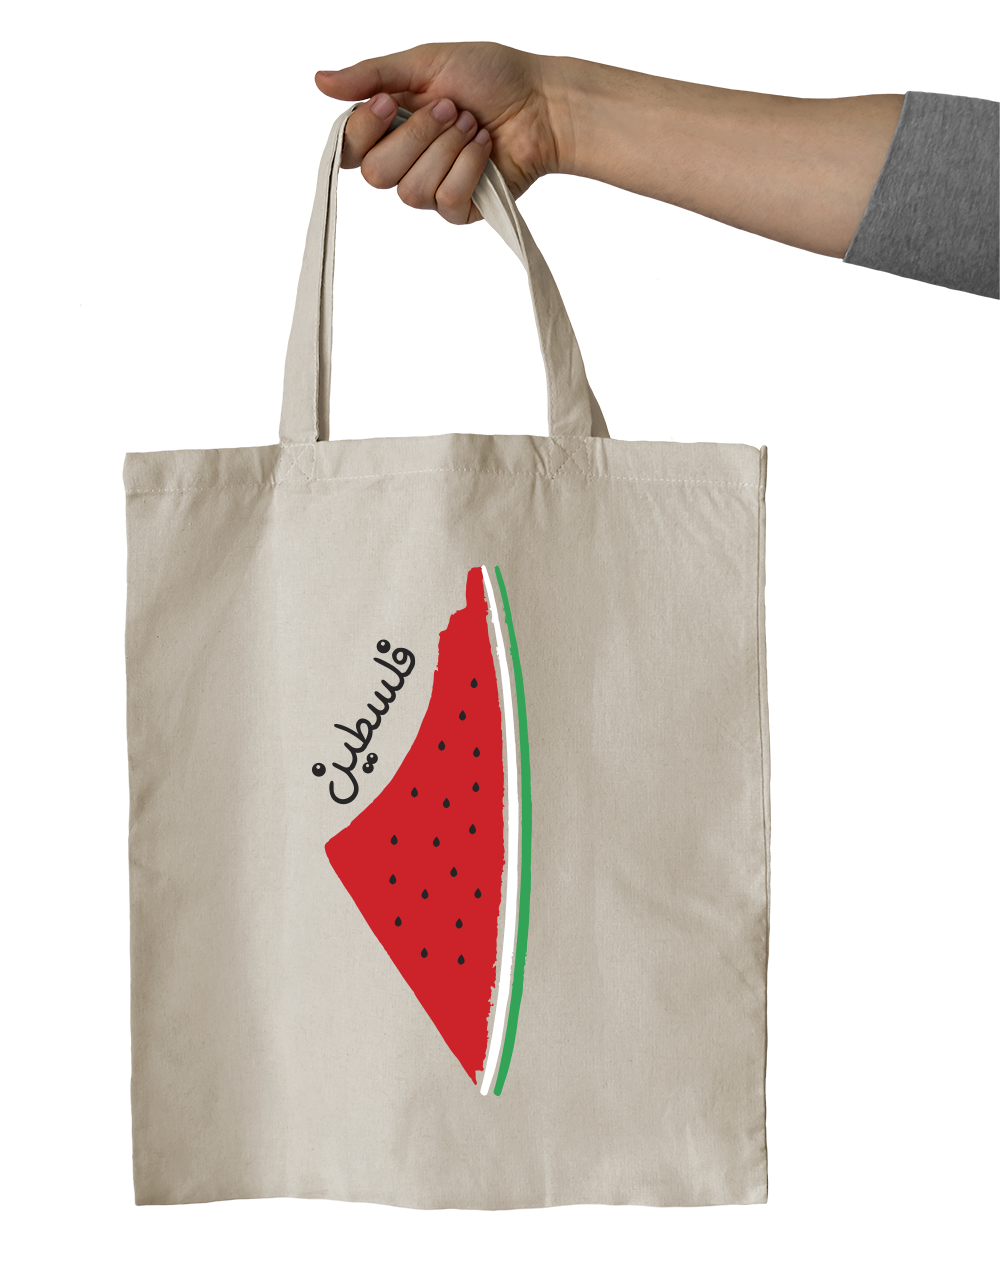 Palestinian Pride Bag: Stylish and meaningful design celebrating heritage.